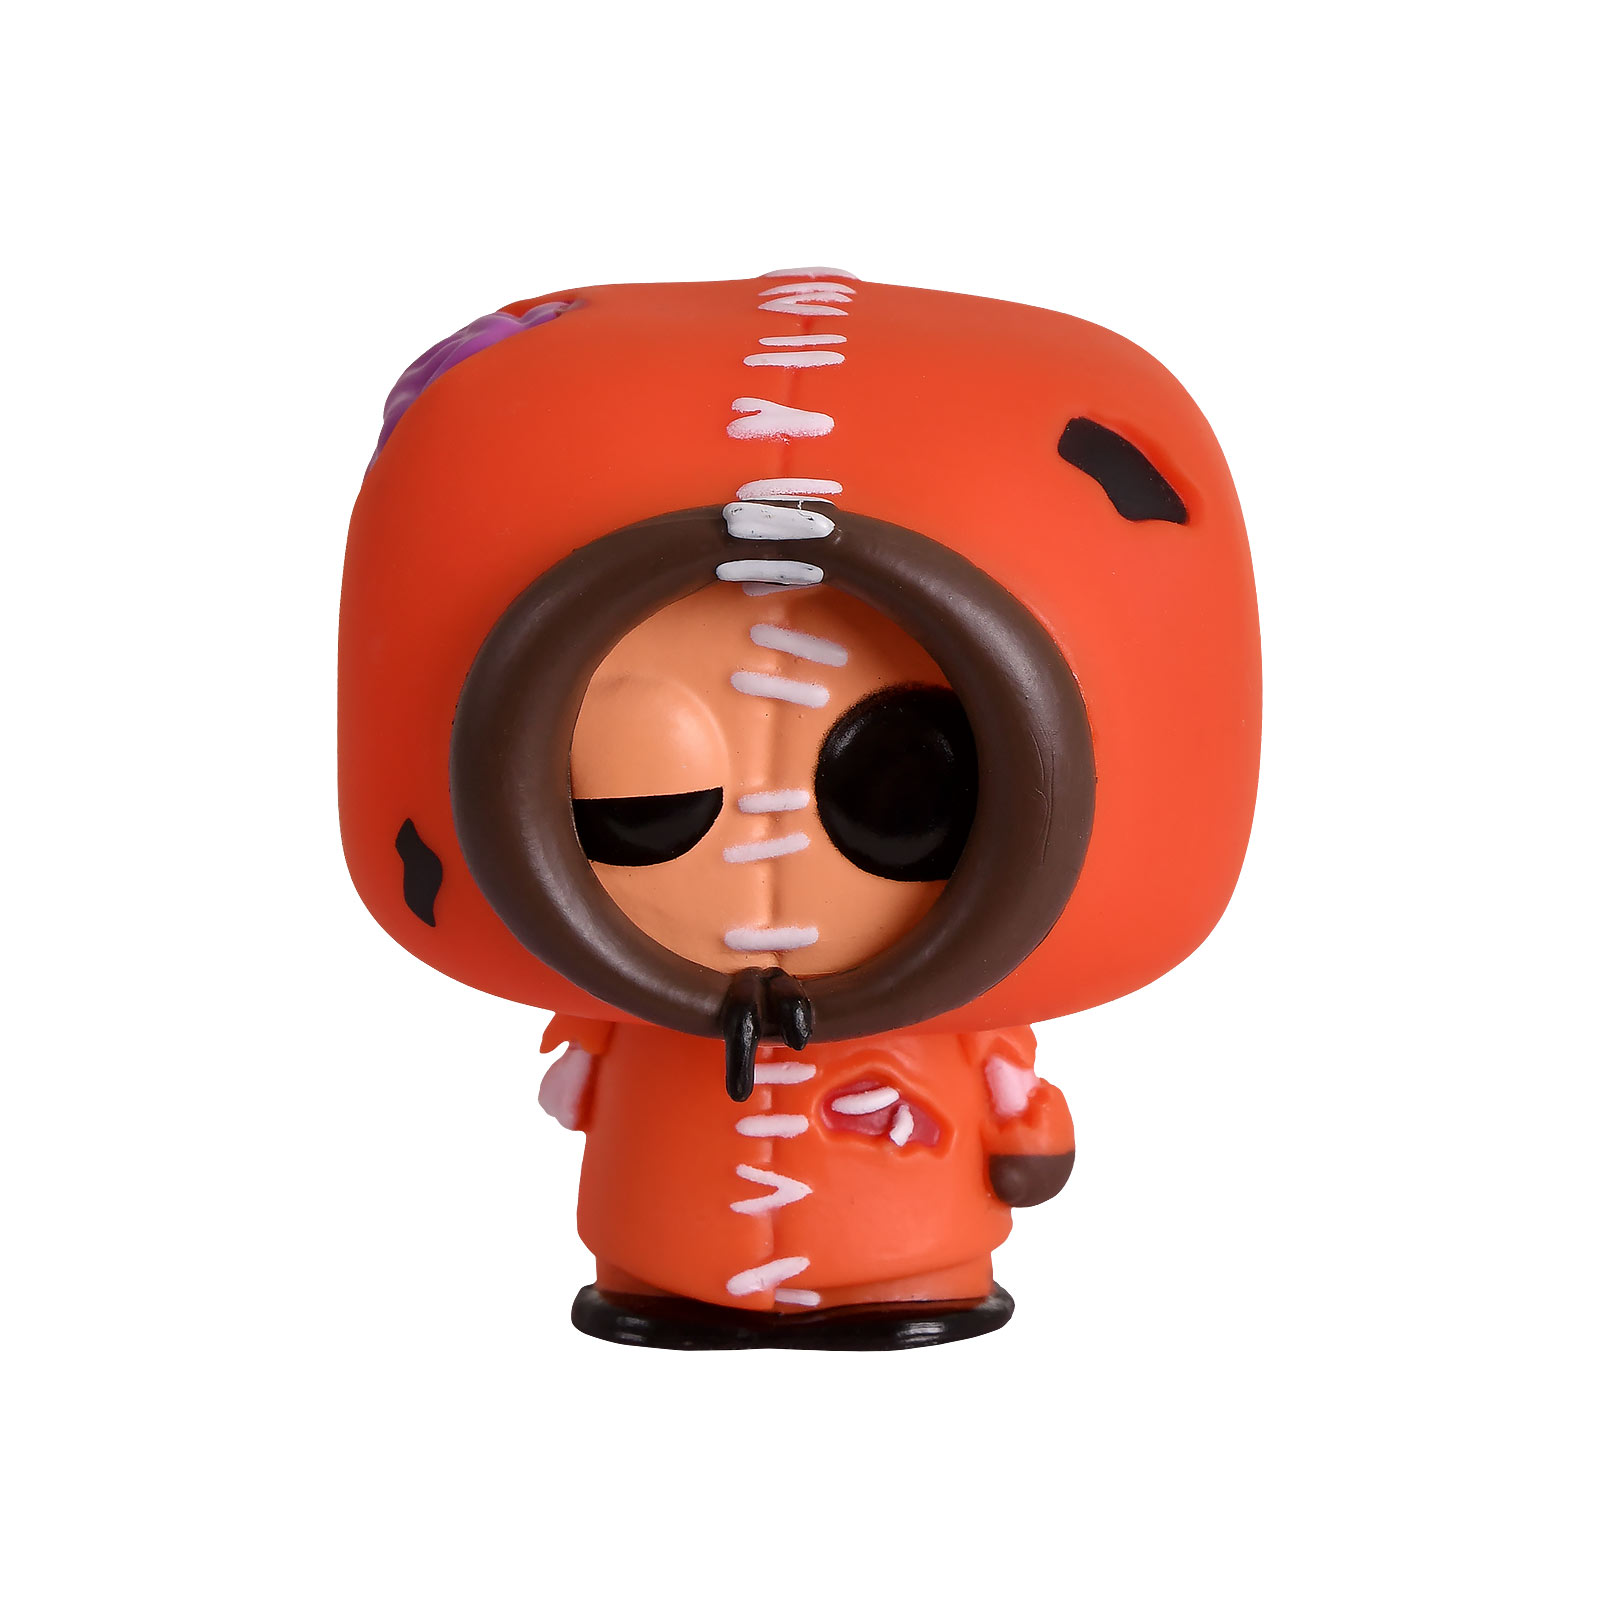 South Park - Figurine Funko Pop Zombie Kenny